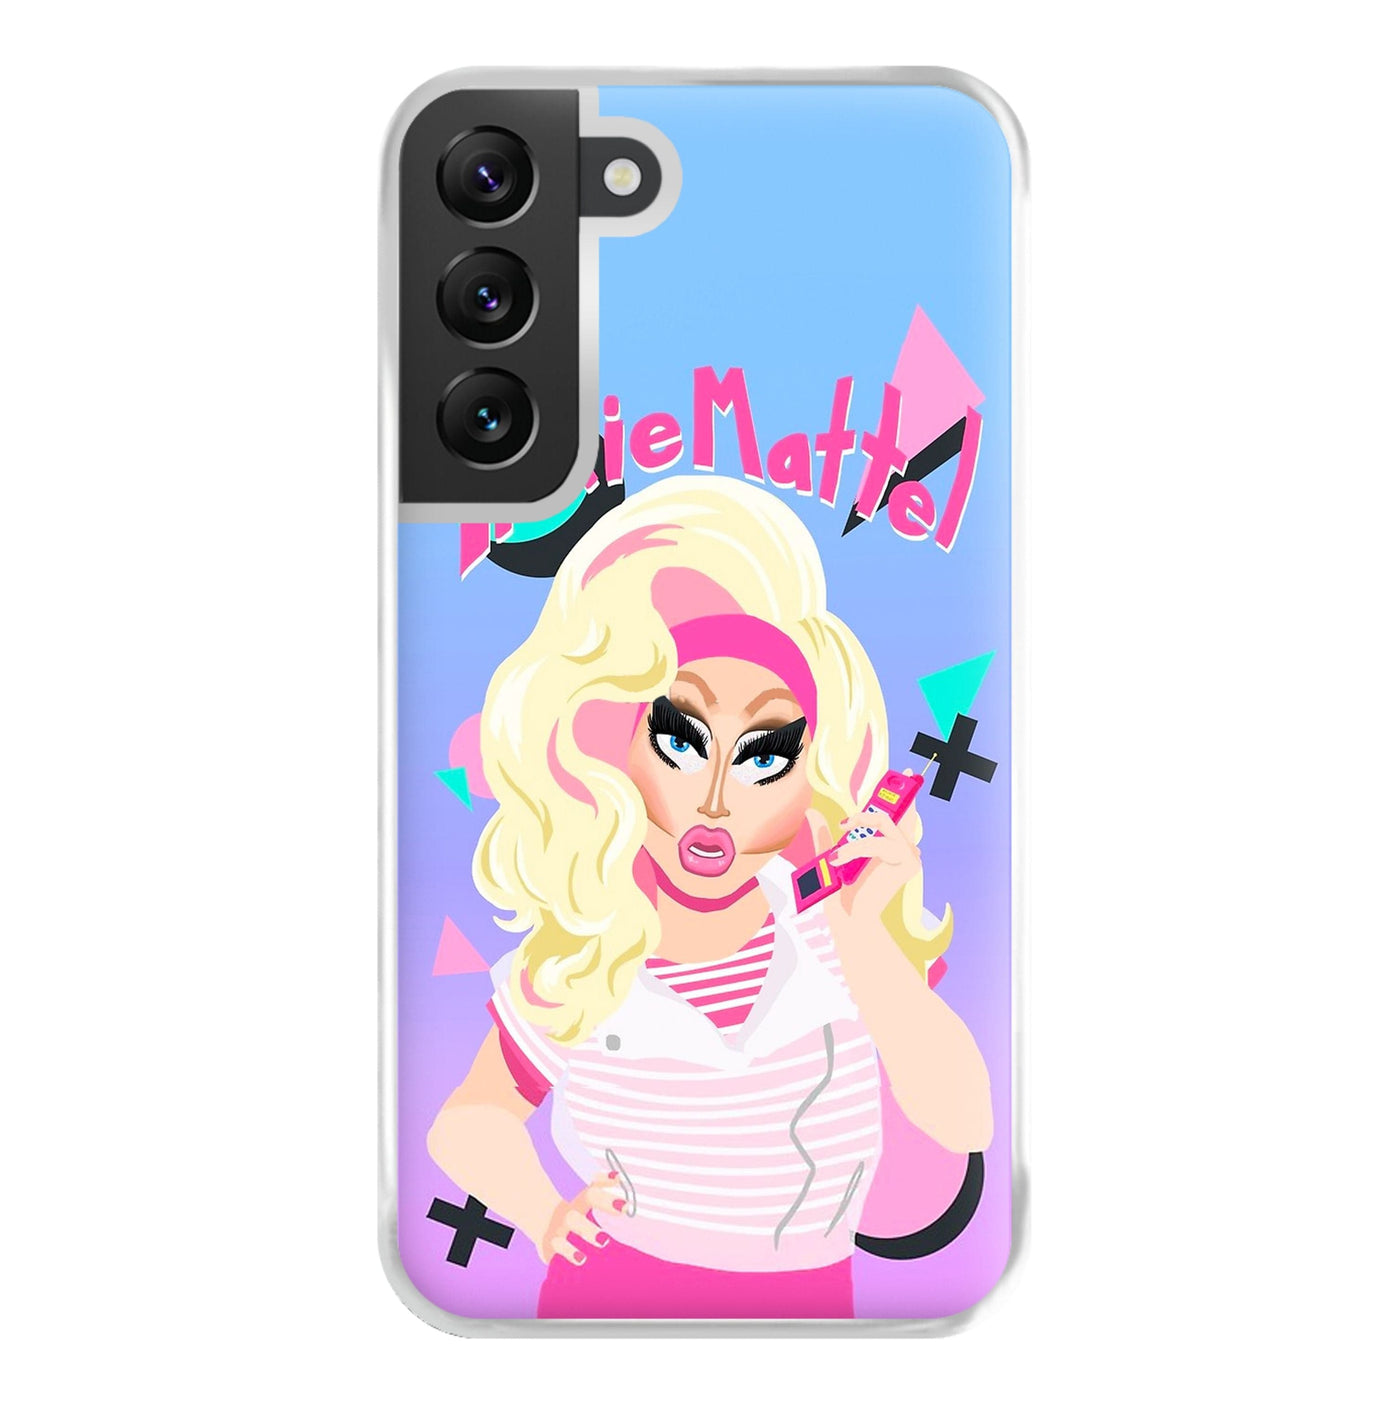 Trixie Mattel 80's Realness - RuPaul's Drag Race Phone Case